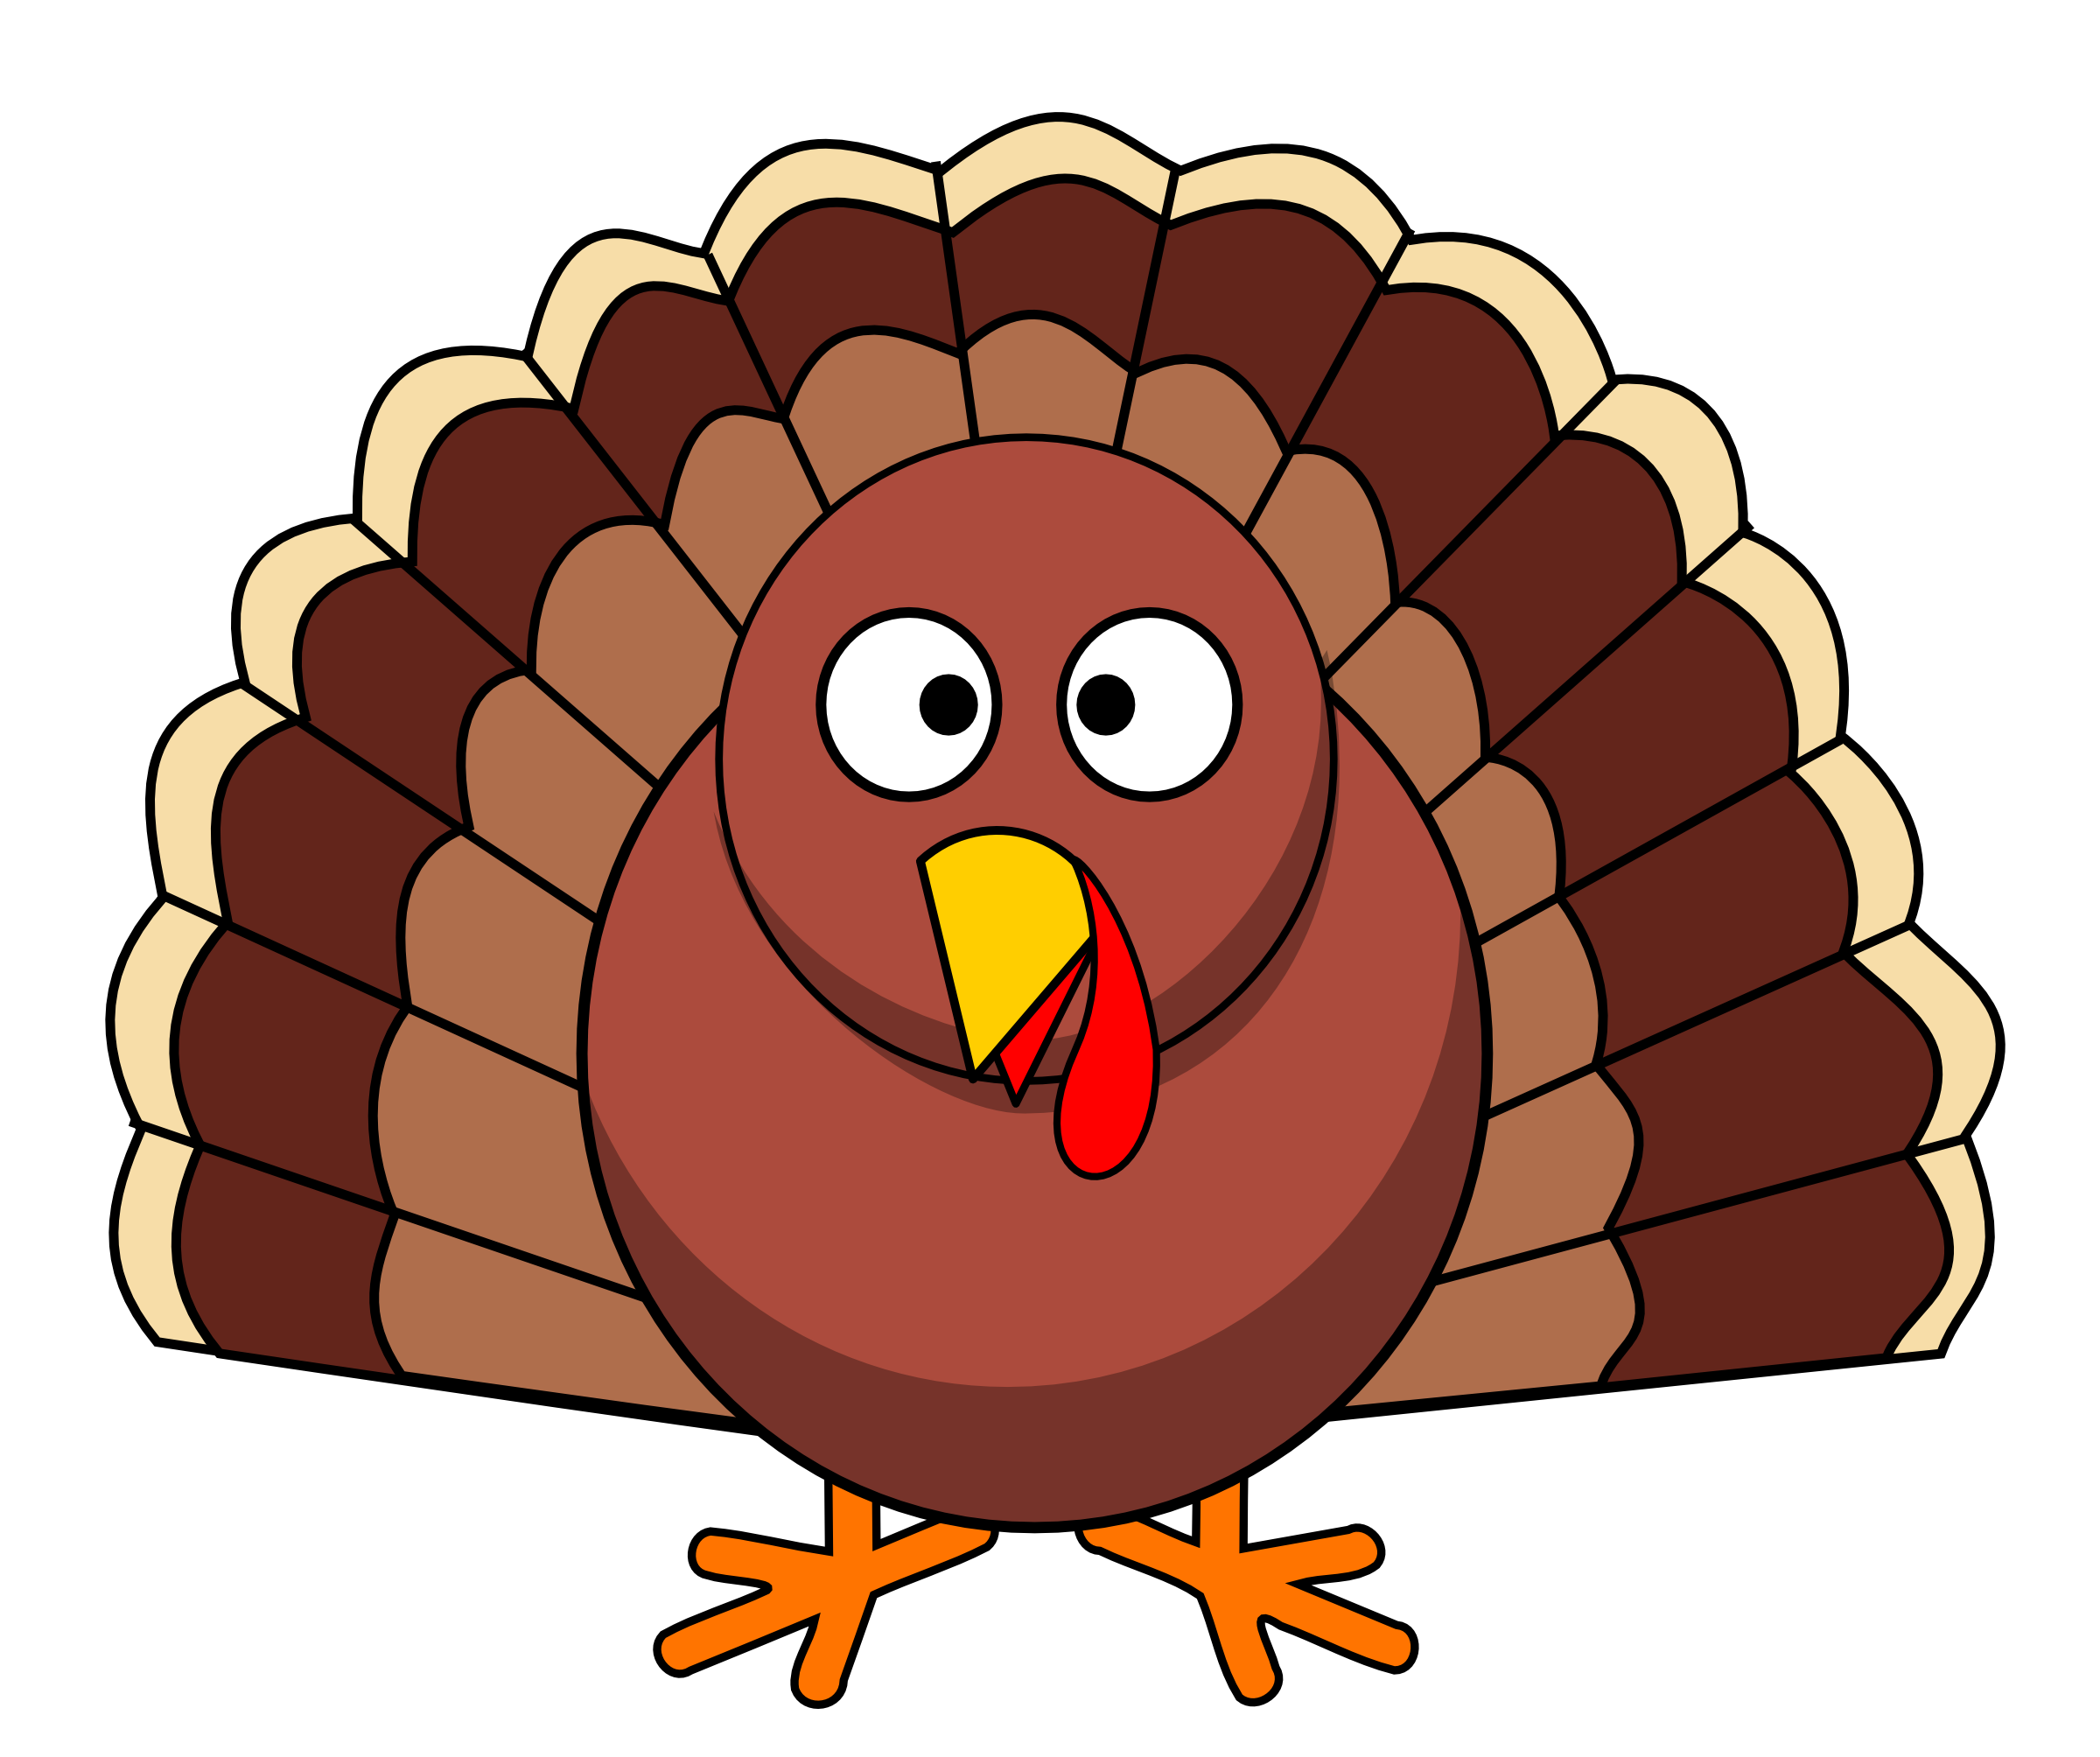 Clip art of a turkey